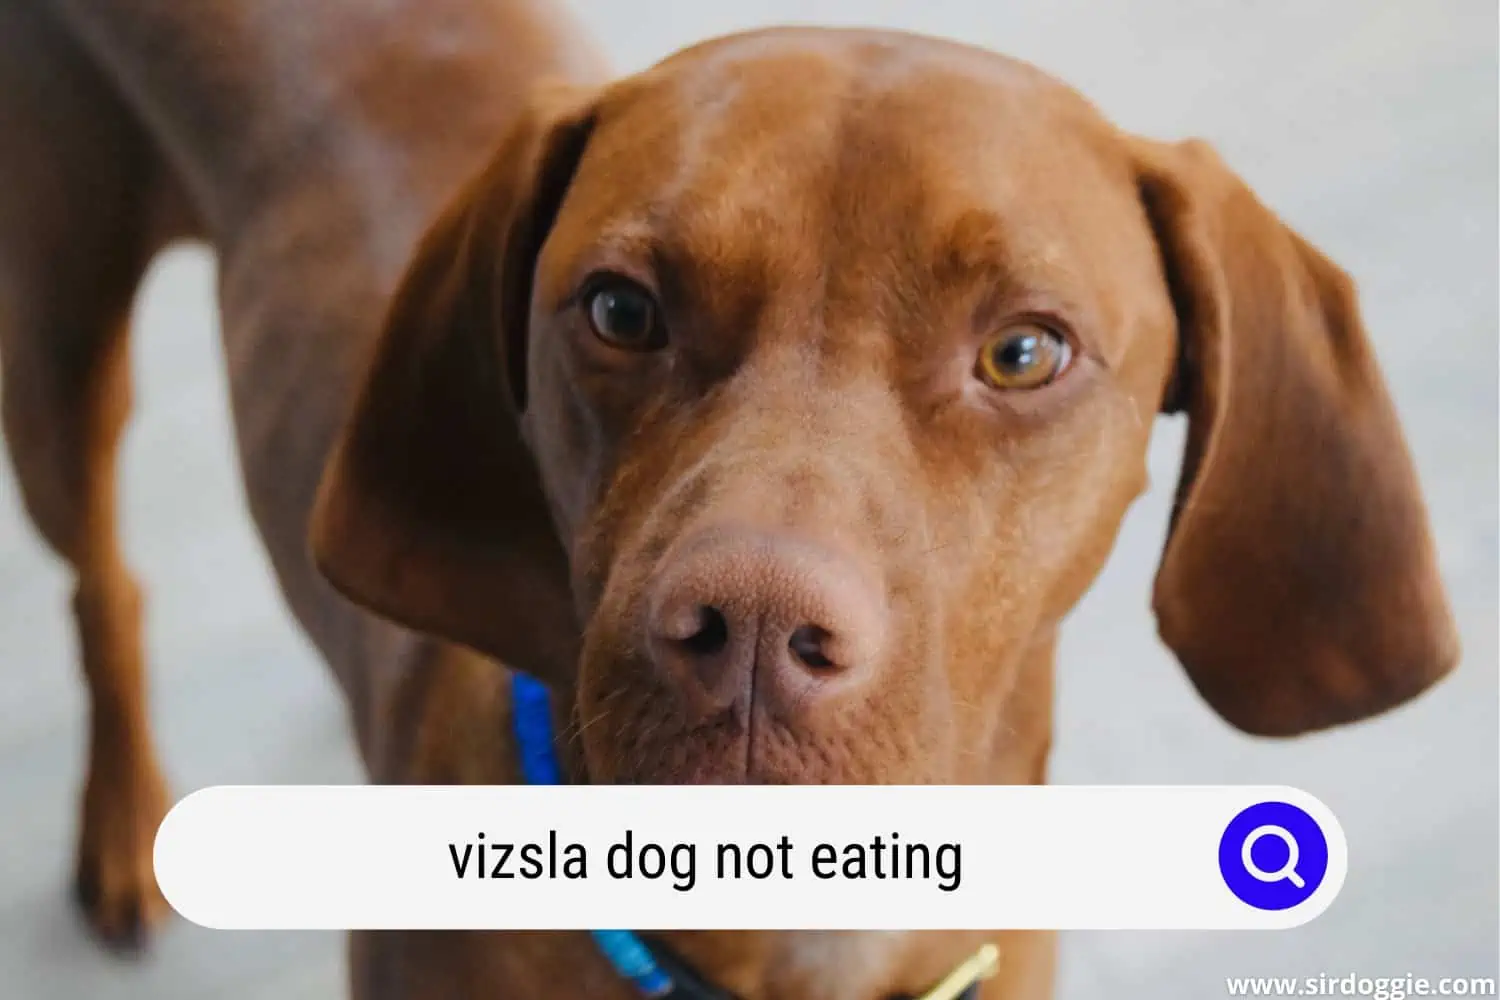 A Vizsla dog not eating